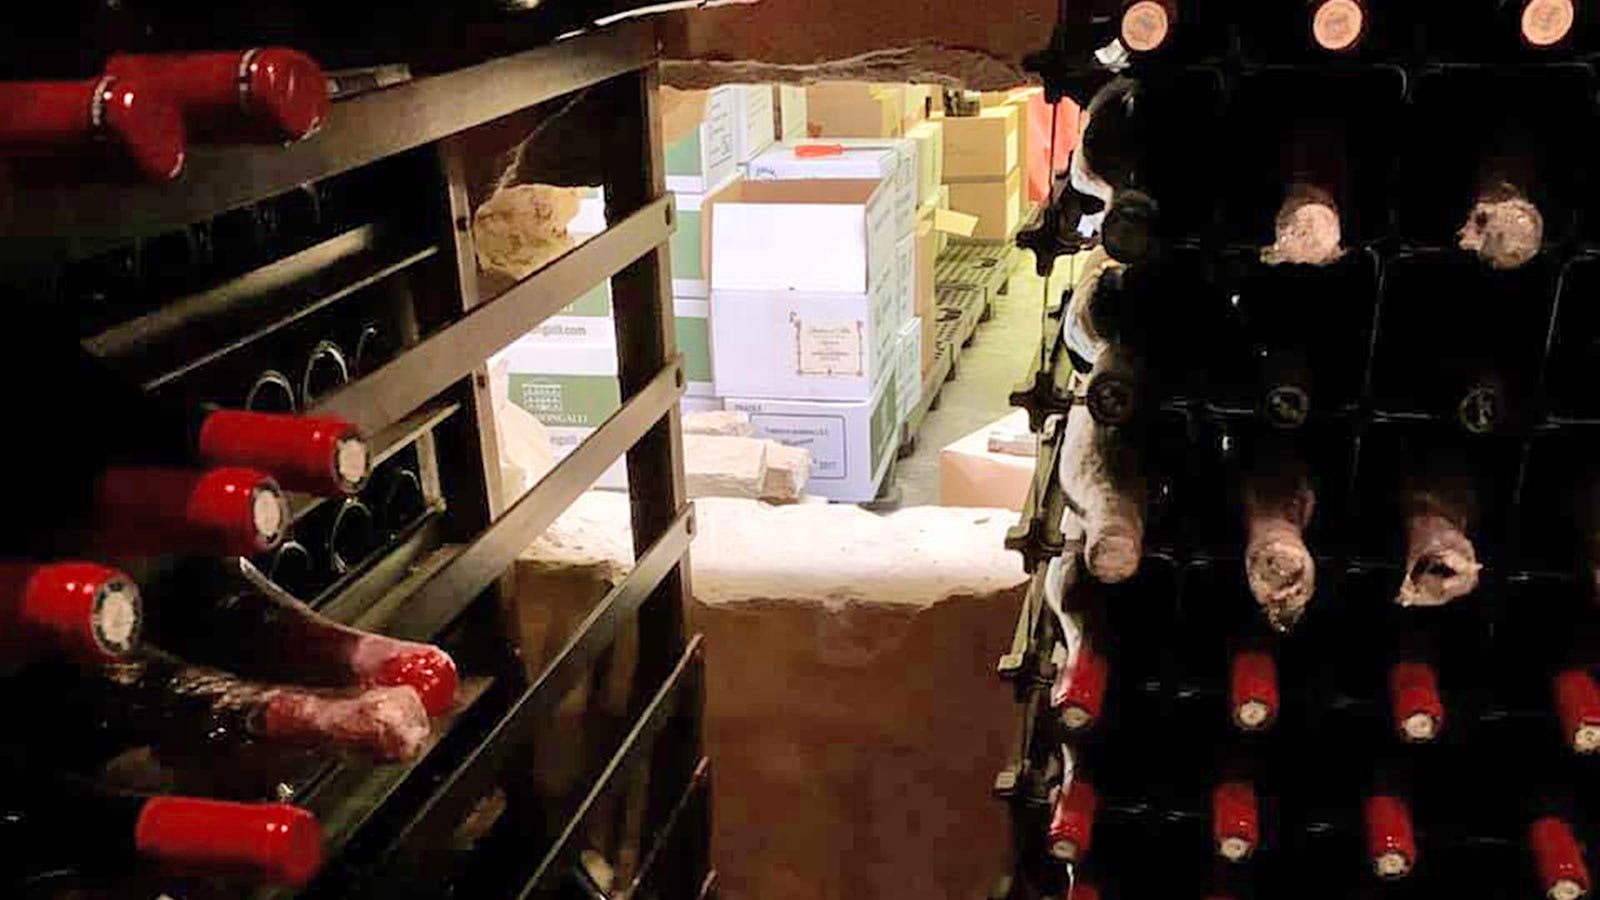 Formel B wine cellar heist